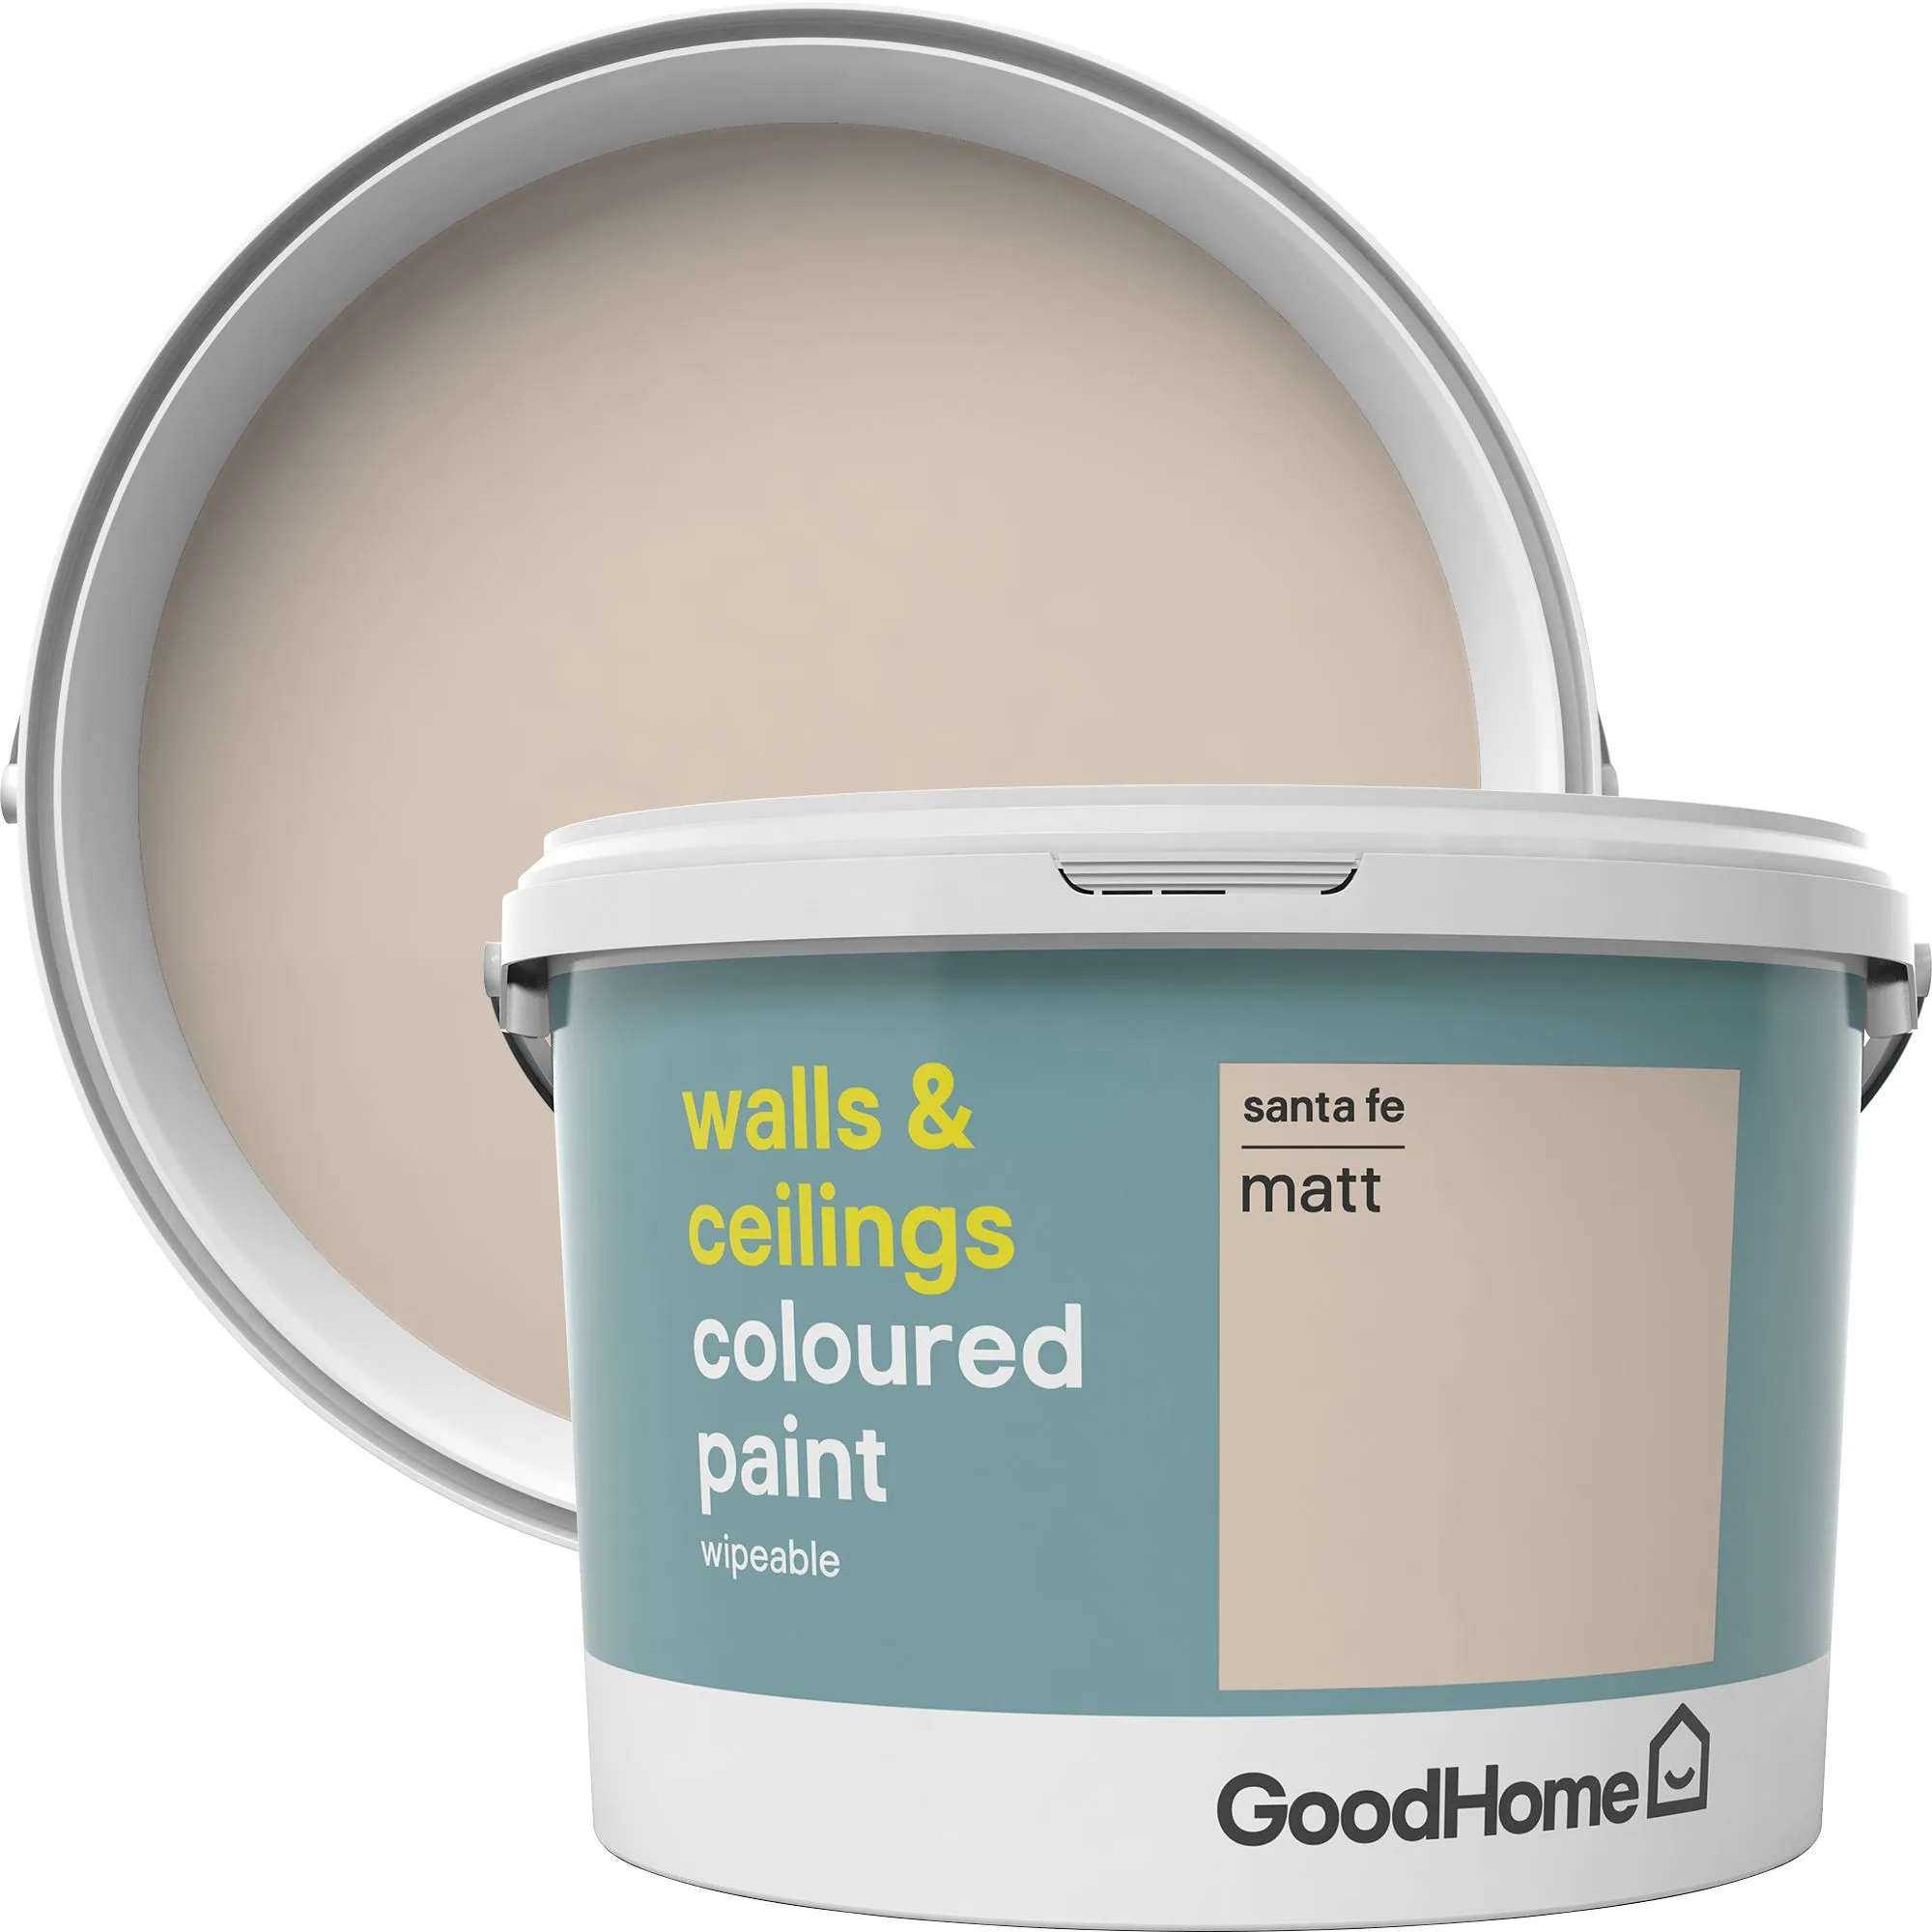 GoodHome Walls & ceilings Santa fe Matt Emulsion paint, 2.5L